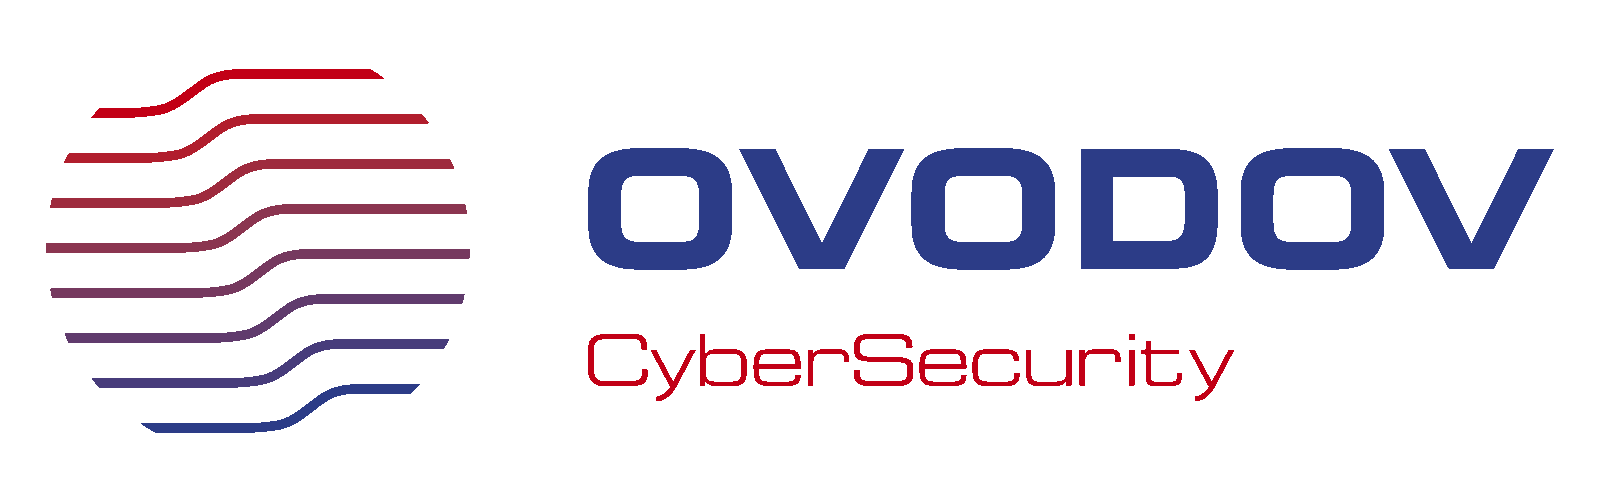 Ovodov CyberSecurity